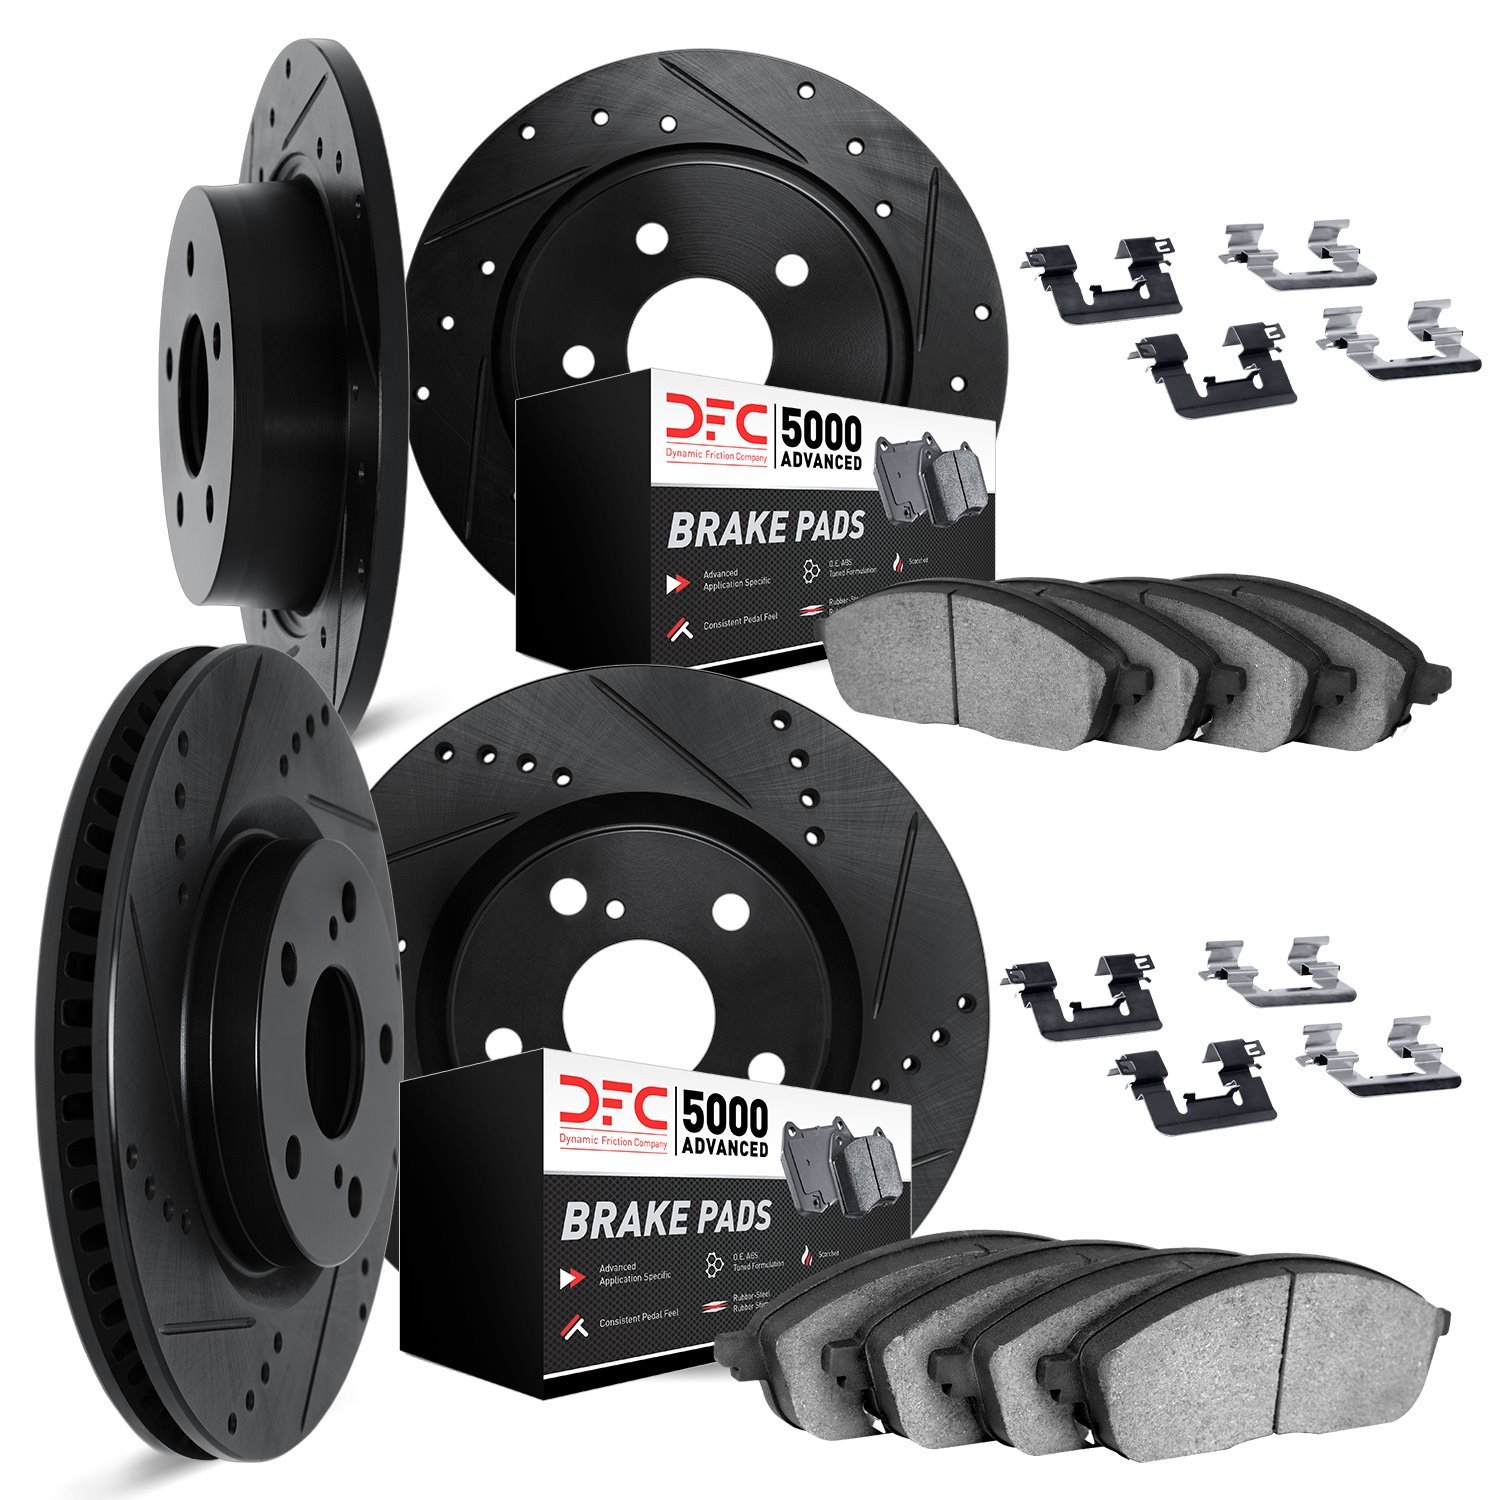 8514-03081 Drilled/Slotted Brake Rotors w/5000 Advanced Brake Pads Kit & Hardware [Black], Fits Select Kia/Hyundai/Genesis, Posi